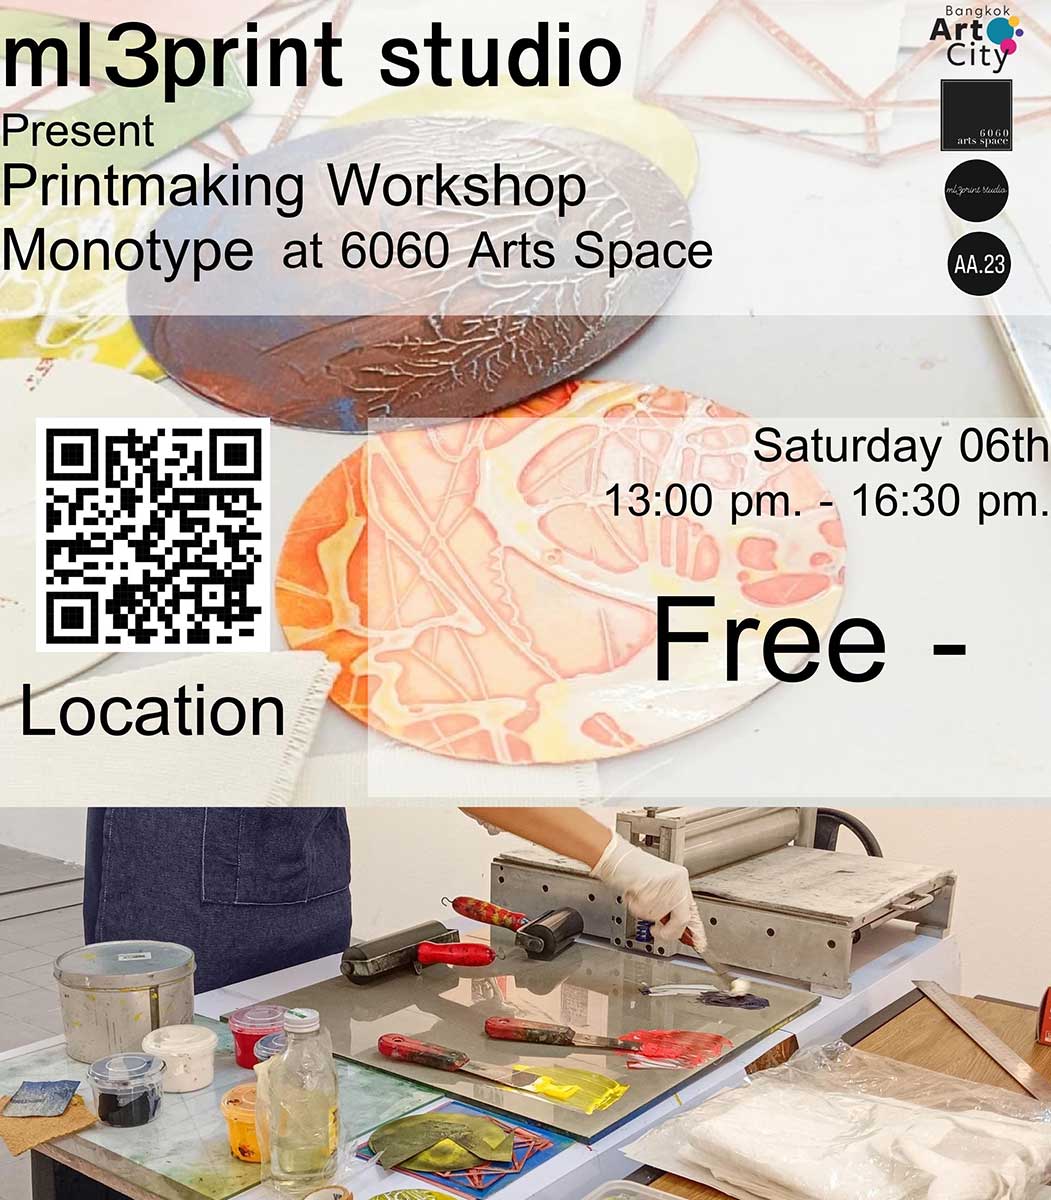 Printmaking Workshop Monotype | กิจกรรม Workshop และสาธิต การสร้างสรรค์ผลงานศิลปะภาพพิมพ์ในเทคนิค Monotype